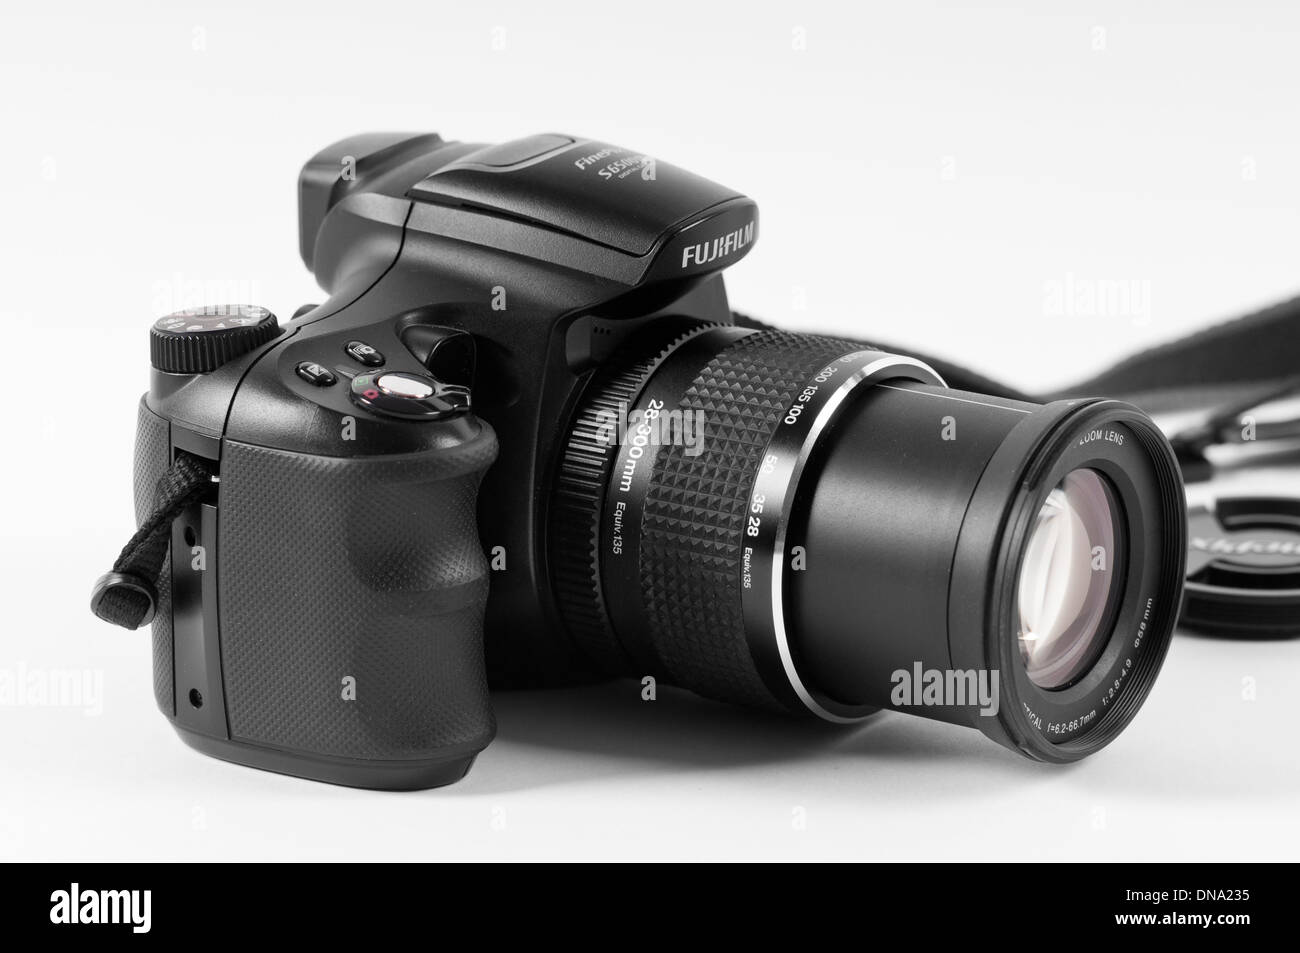 amateur digital camera Fuji s6500 lens zoom Stock Photo - Alamy